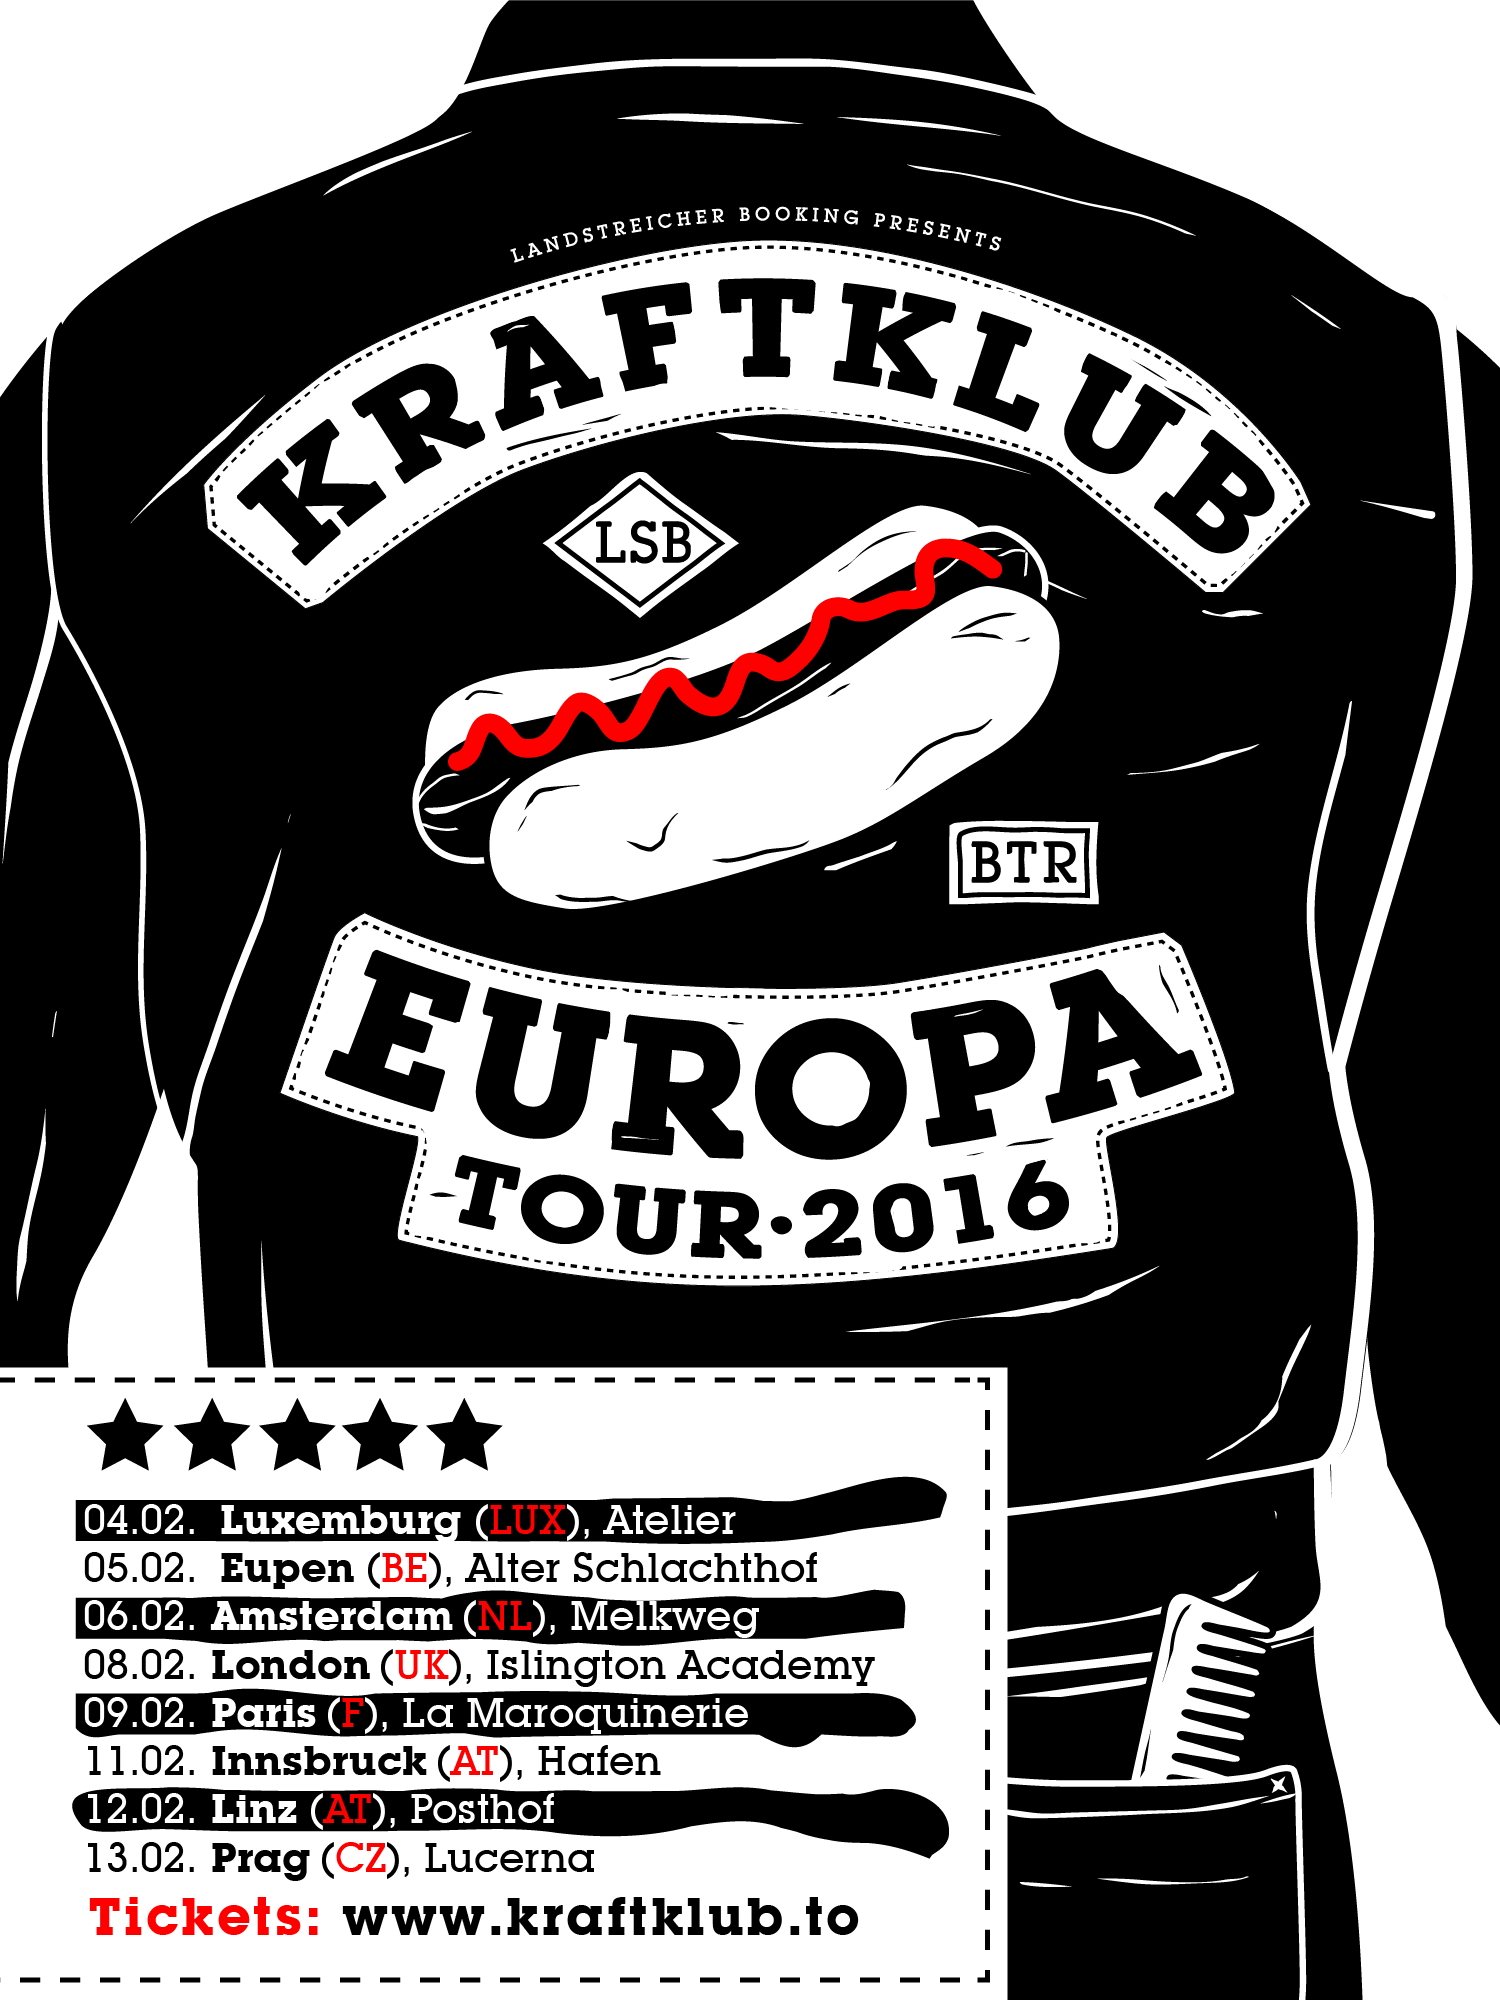 Kraftklub Tour 2016 Dates